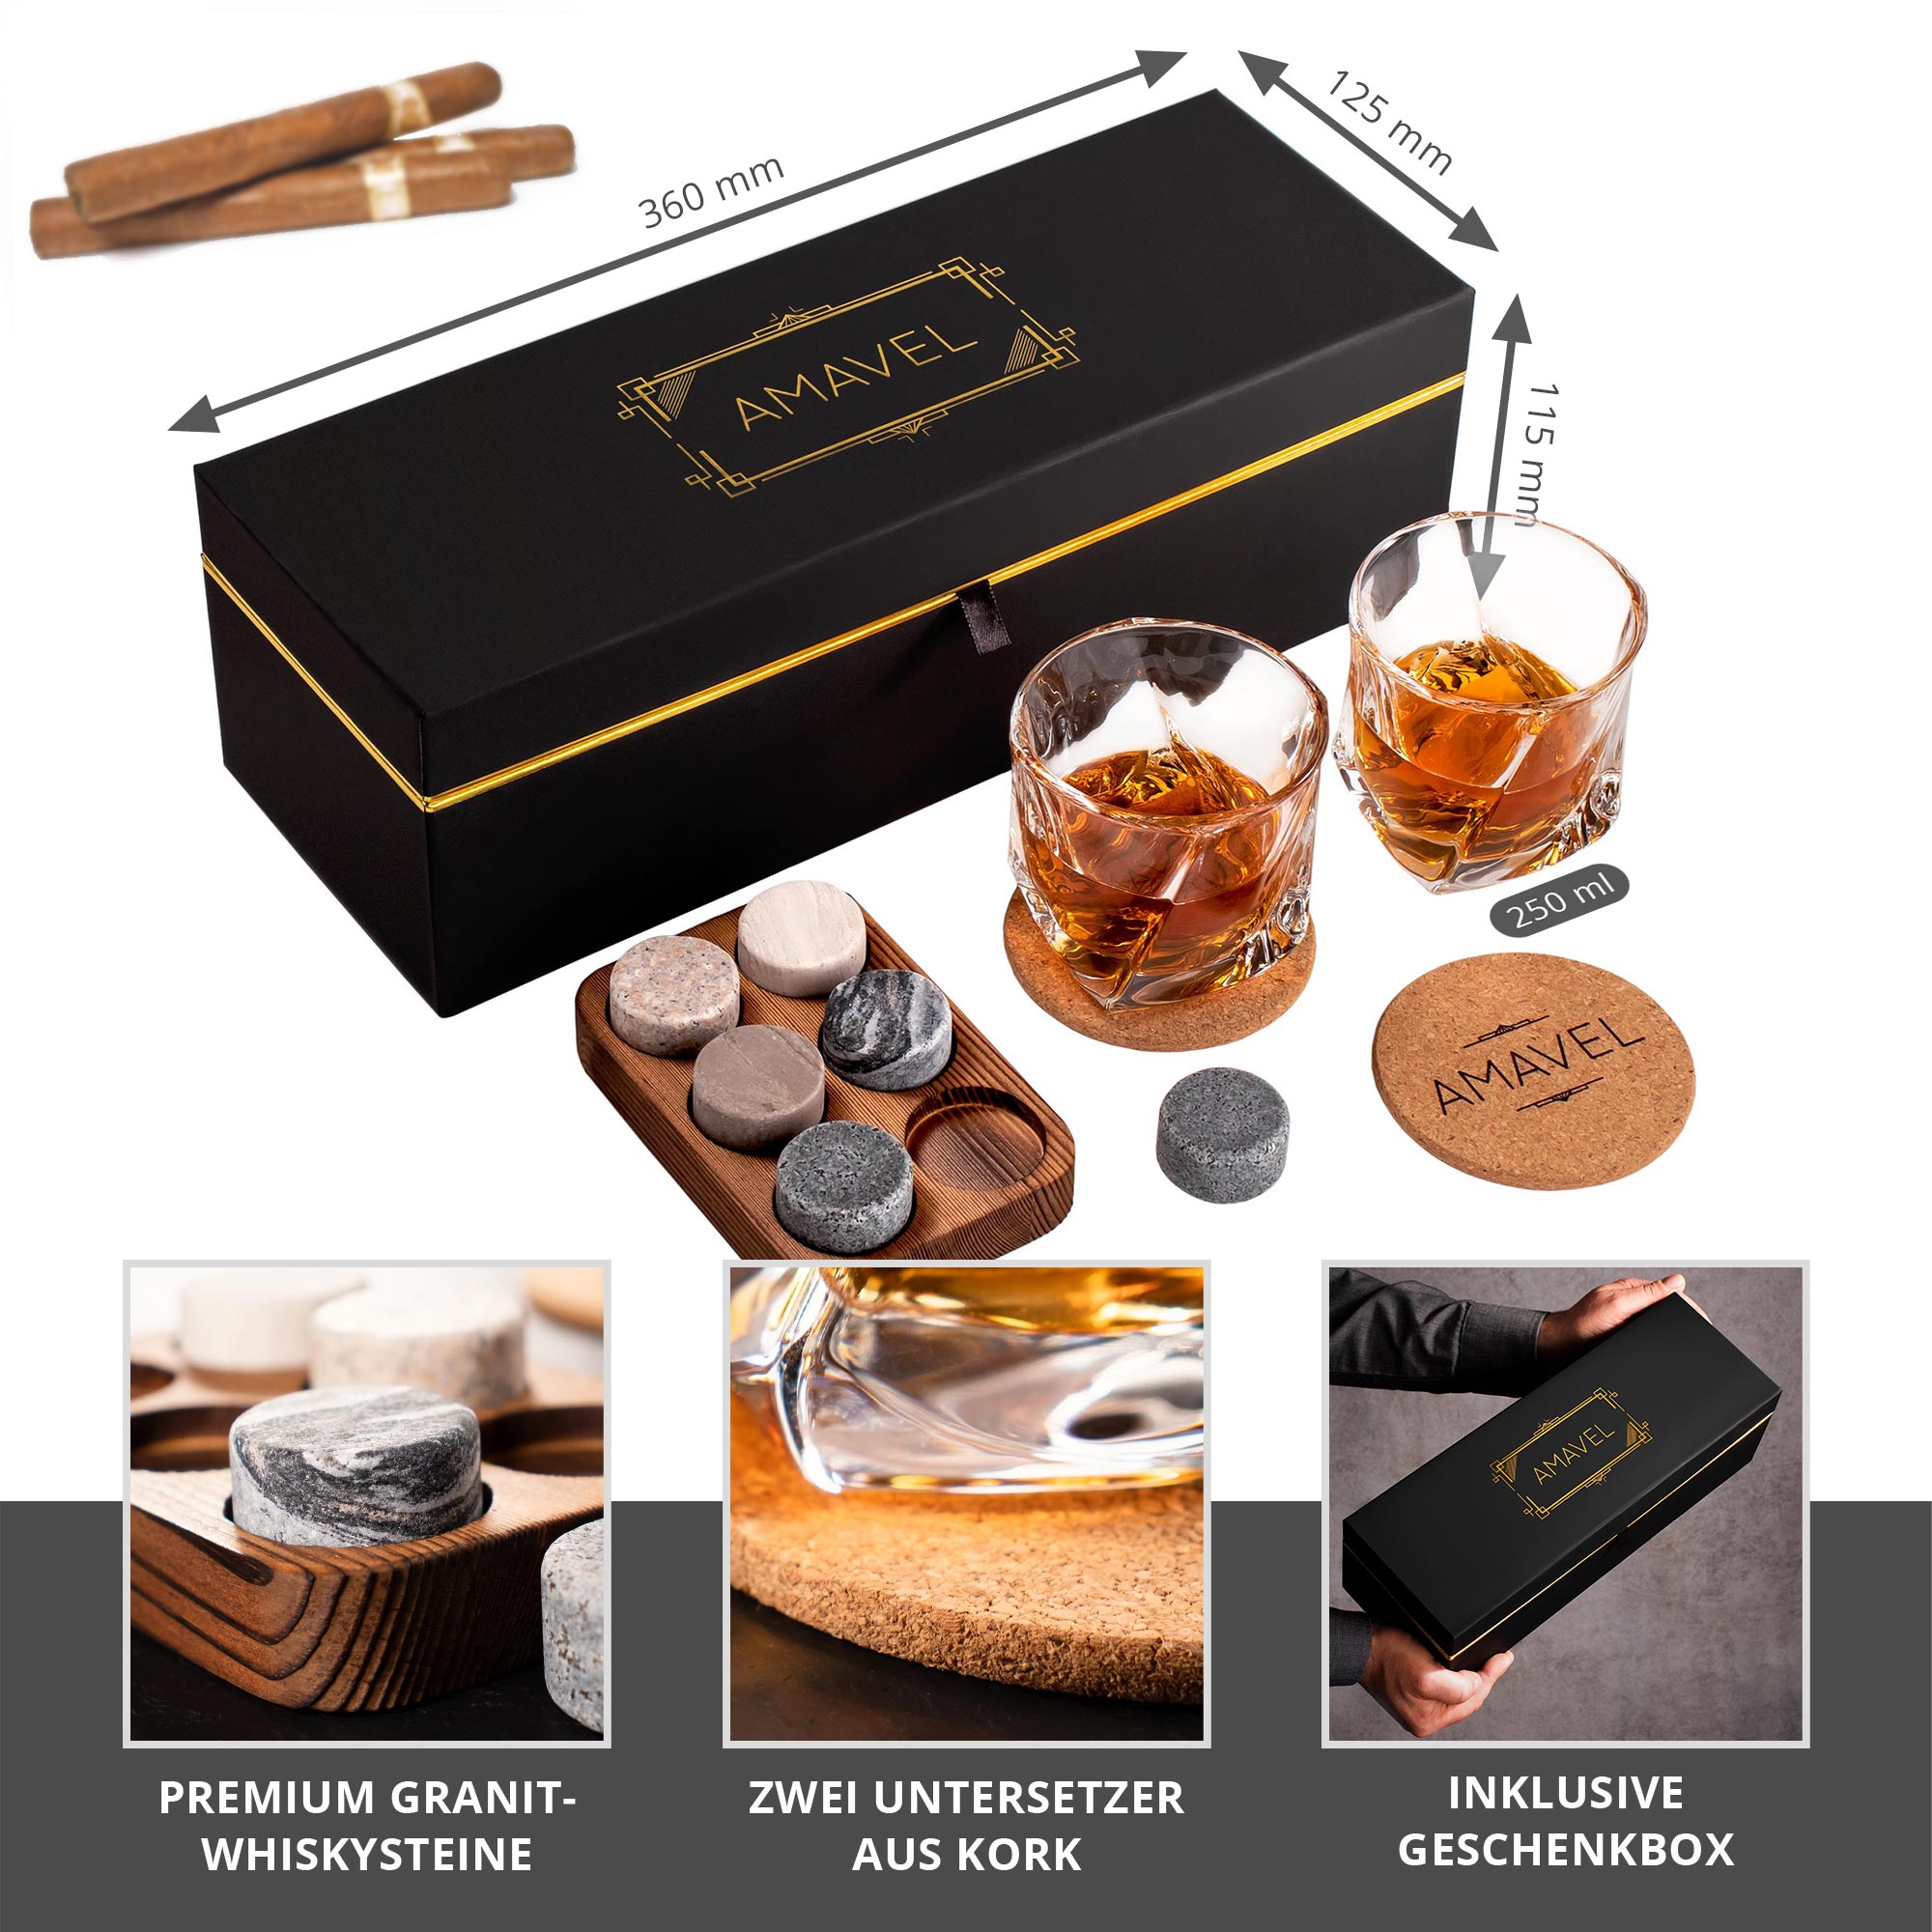 Whisky Tasting Set in edler Geschenkbox, Whiskyglas,whiskygläser, Geburtstagsgeschenke,whisky gläser